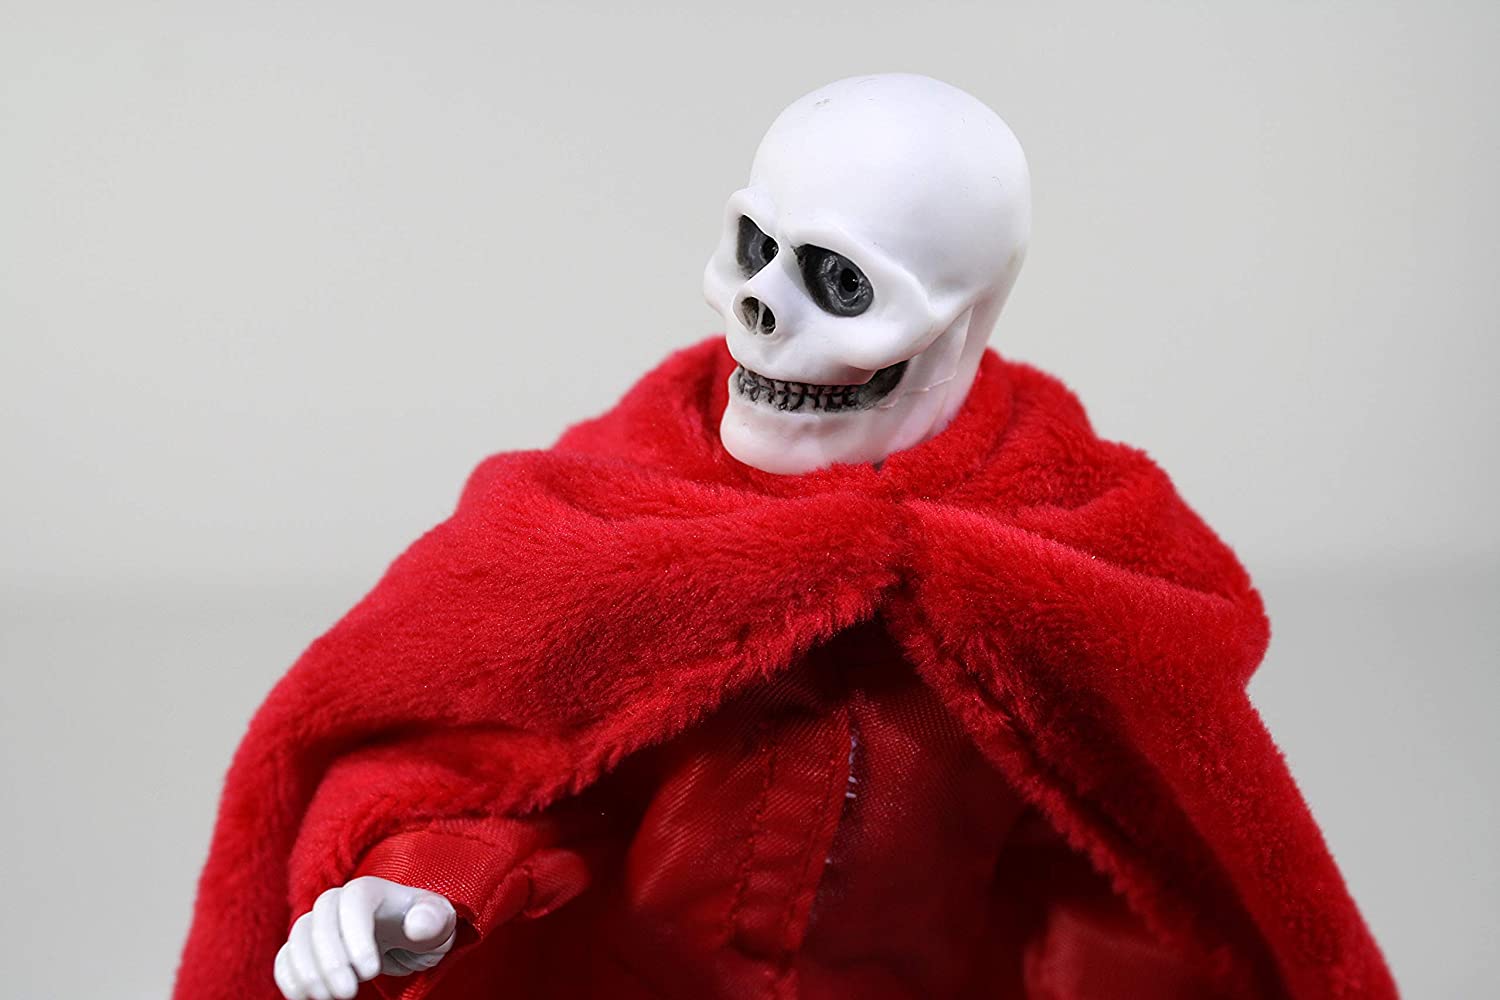 Mego Action Figure Phantom of the Opera Red Death Oficial Licenciado